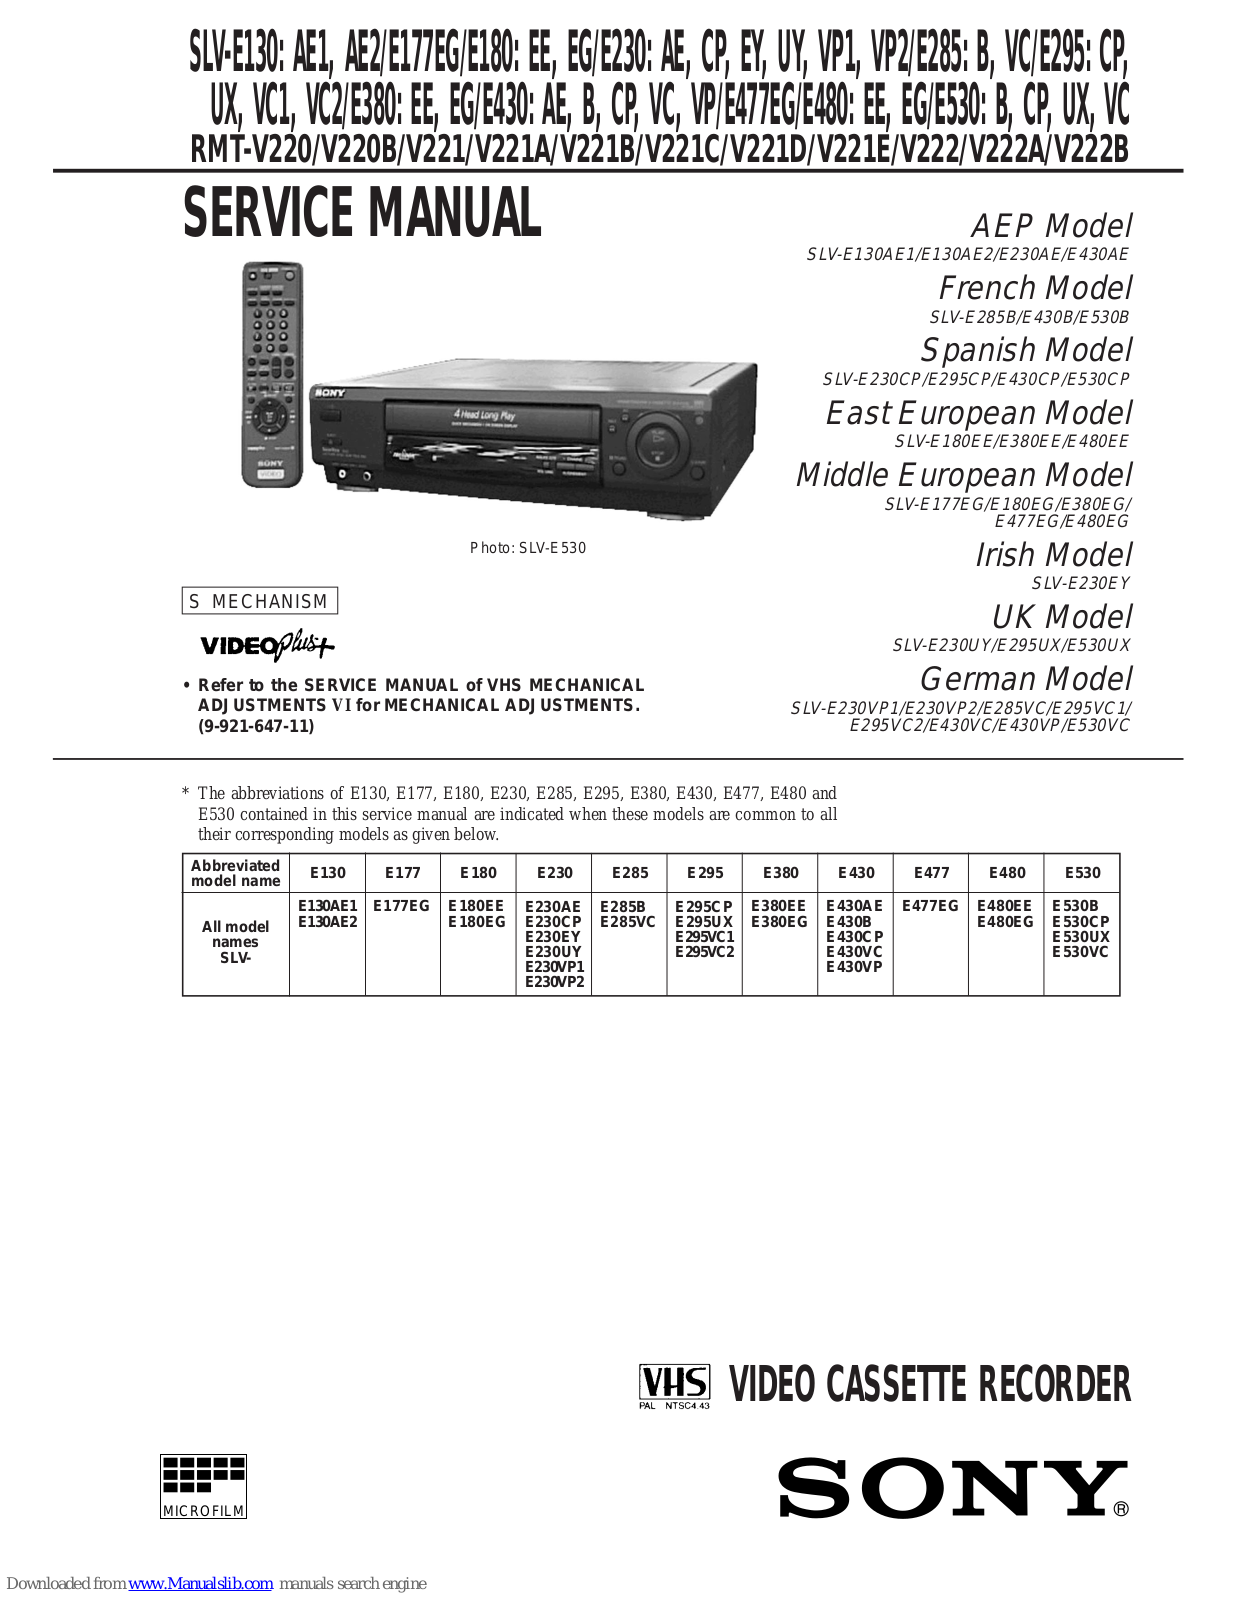 Sony RMT-V220, RMT-V221A, RMT-V220B, RMT-V221, RMT-V221B Service Manual